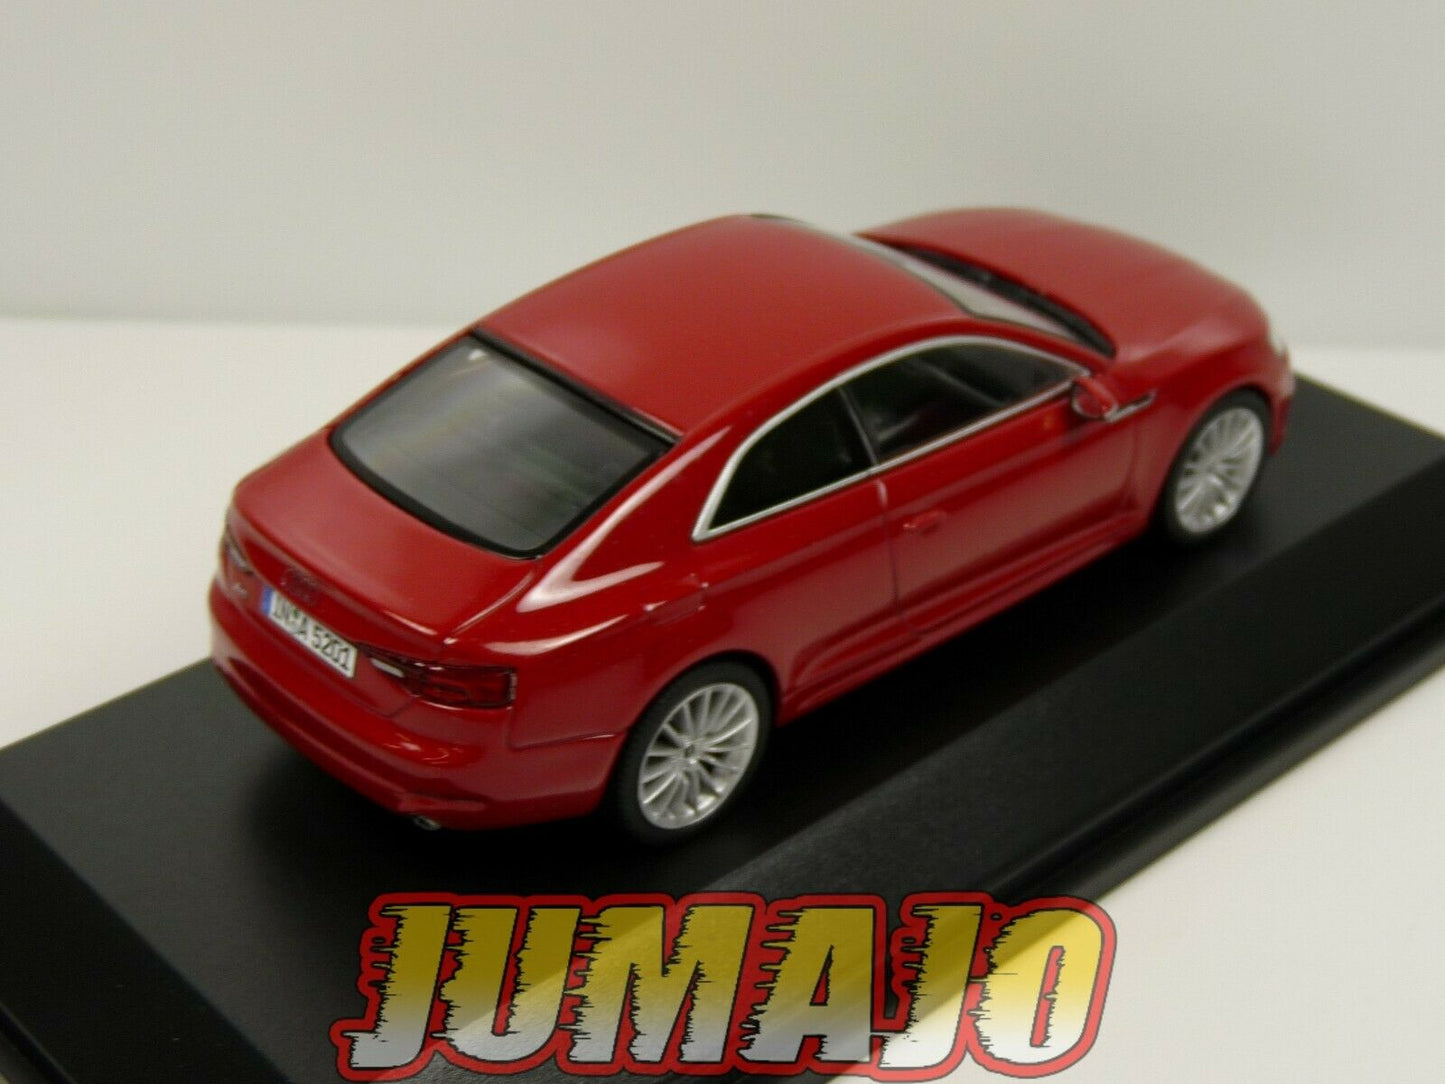 AUD4 voiture 1/43 SPARK : Audi A5 Coupé Tango Red